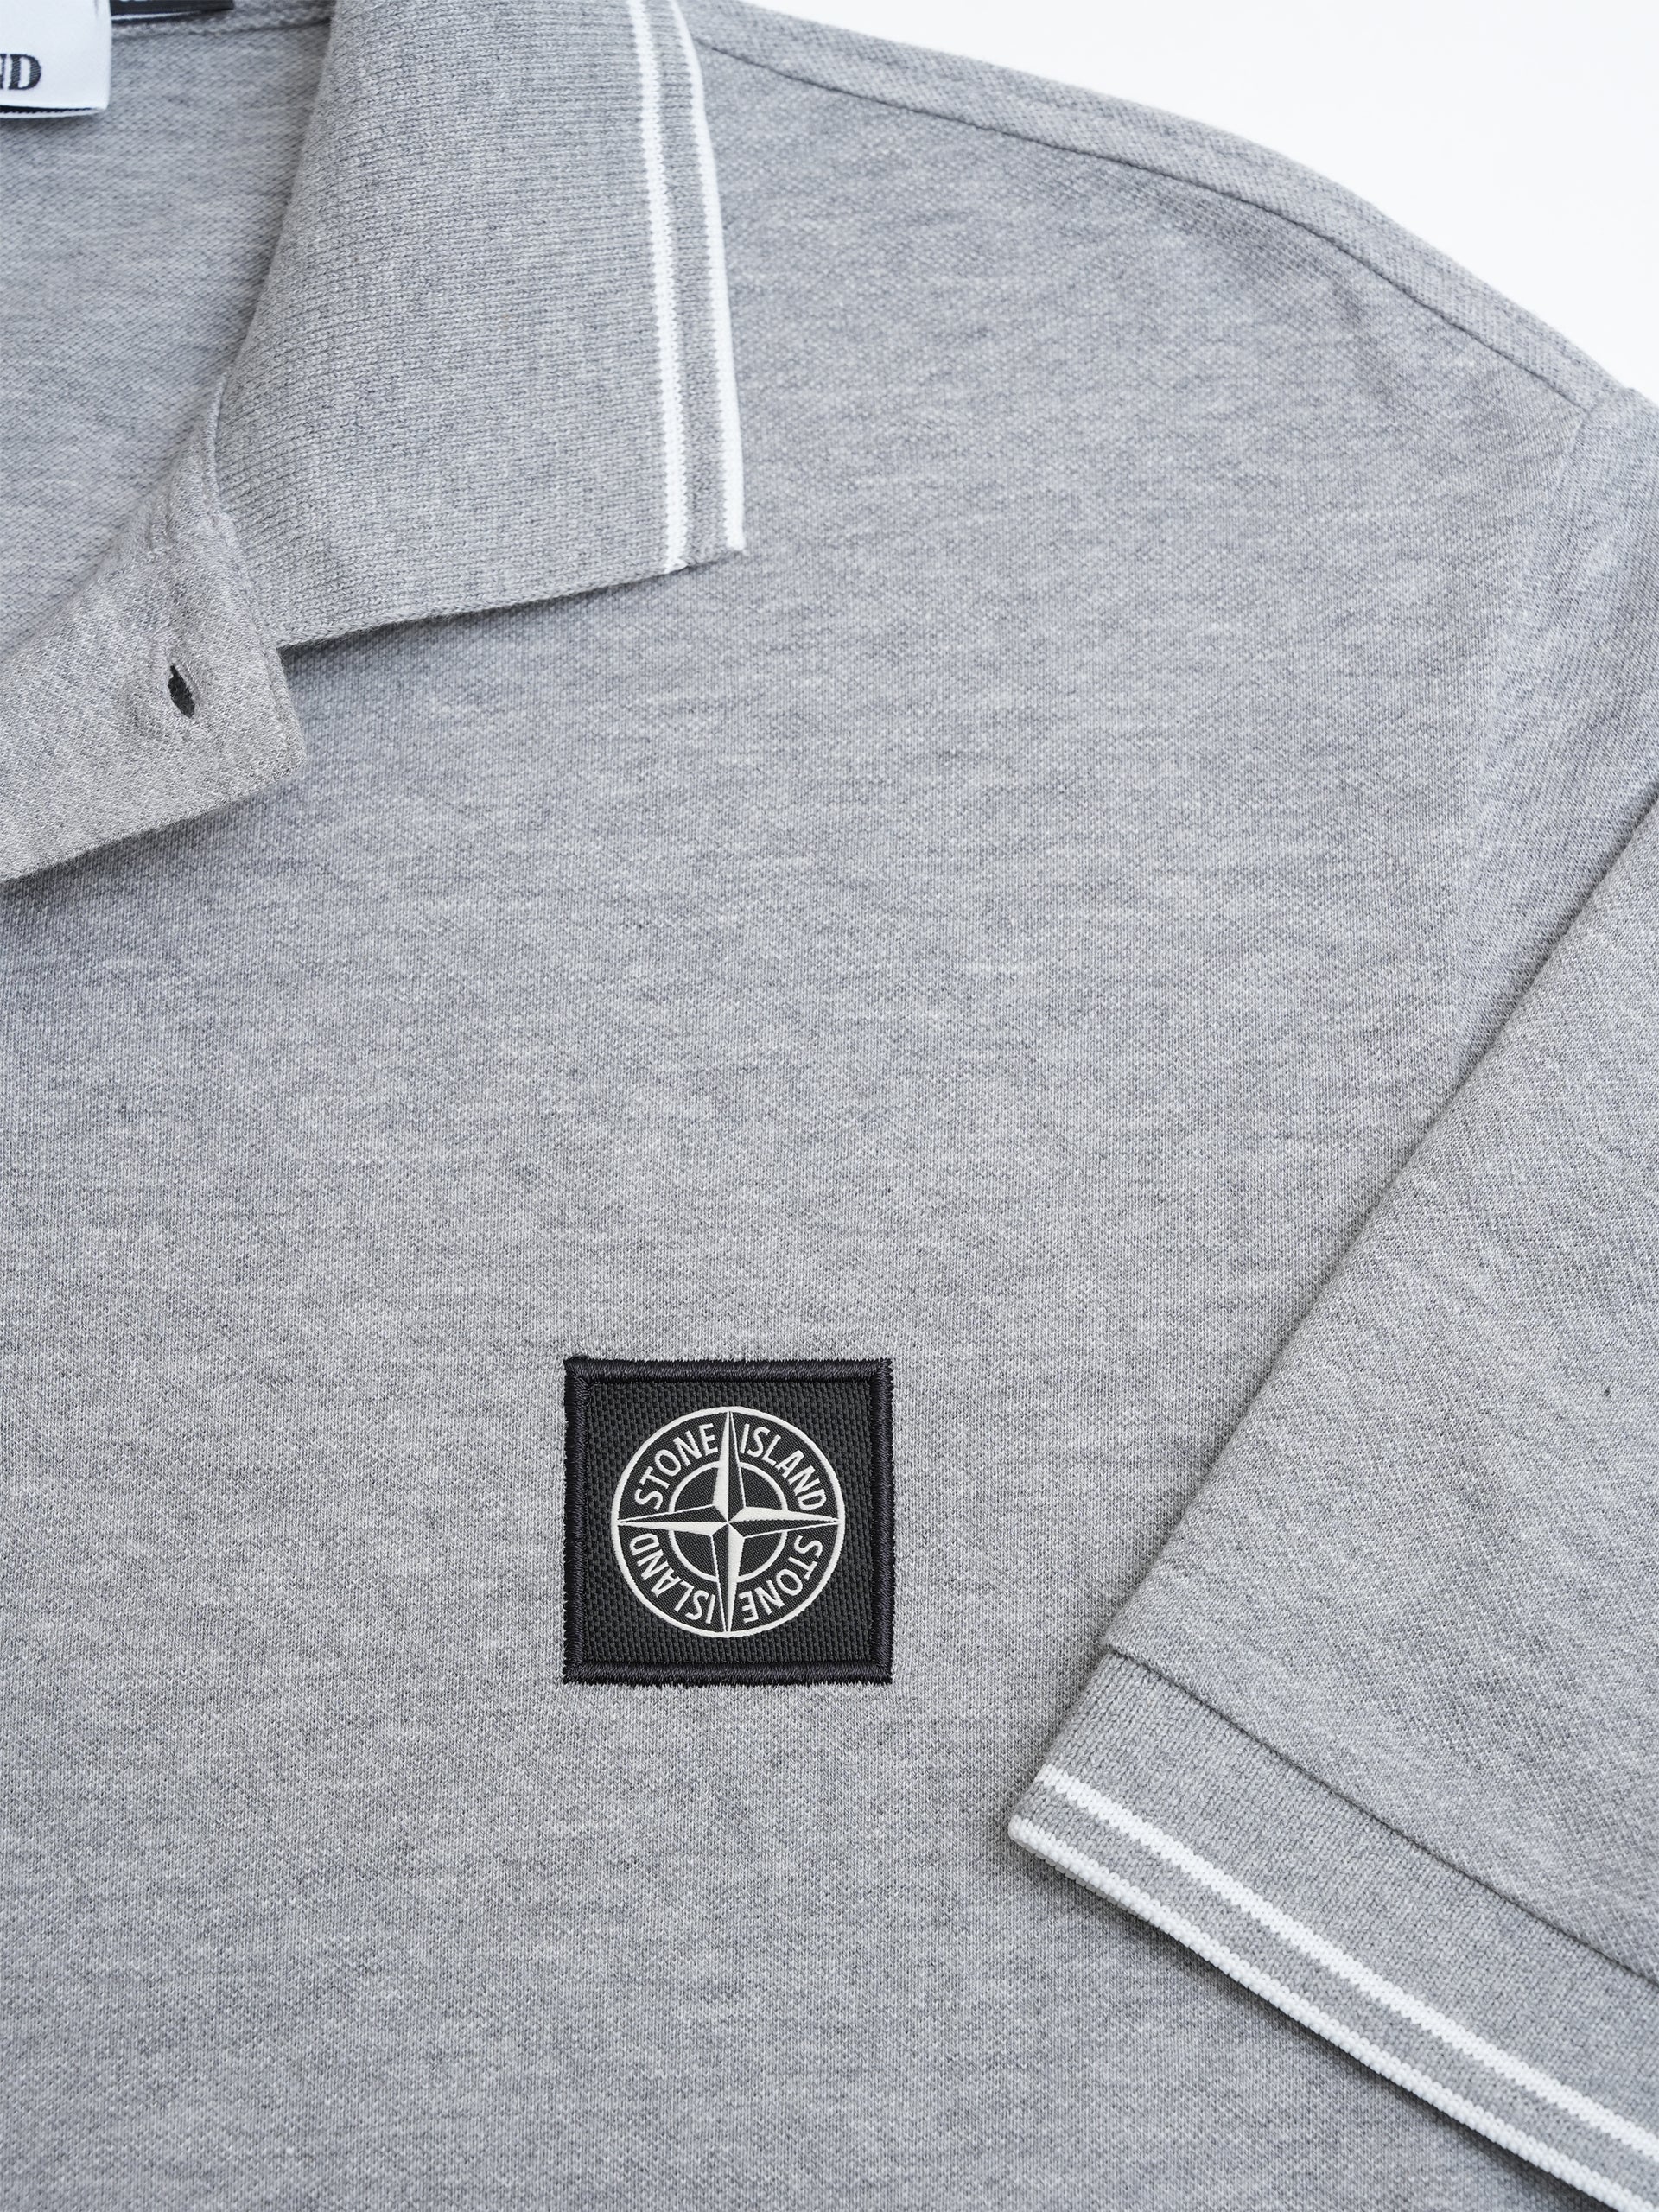 STONE ISLAND - Poloshirt mit Kompass-Patch Hellgrau – Light gray